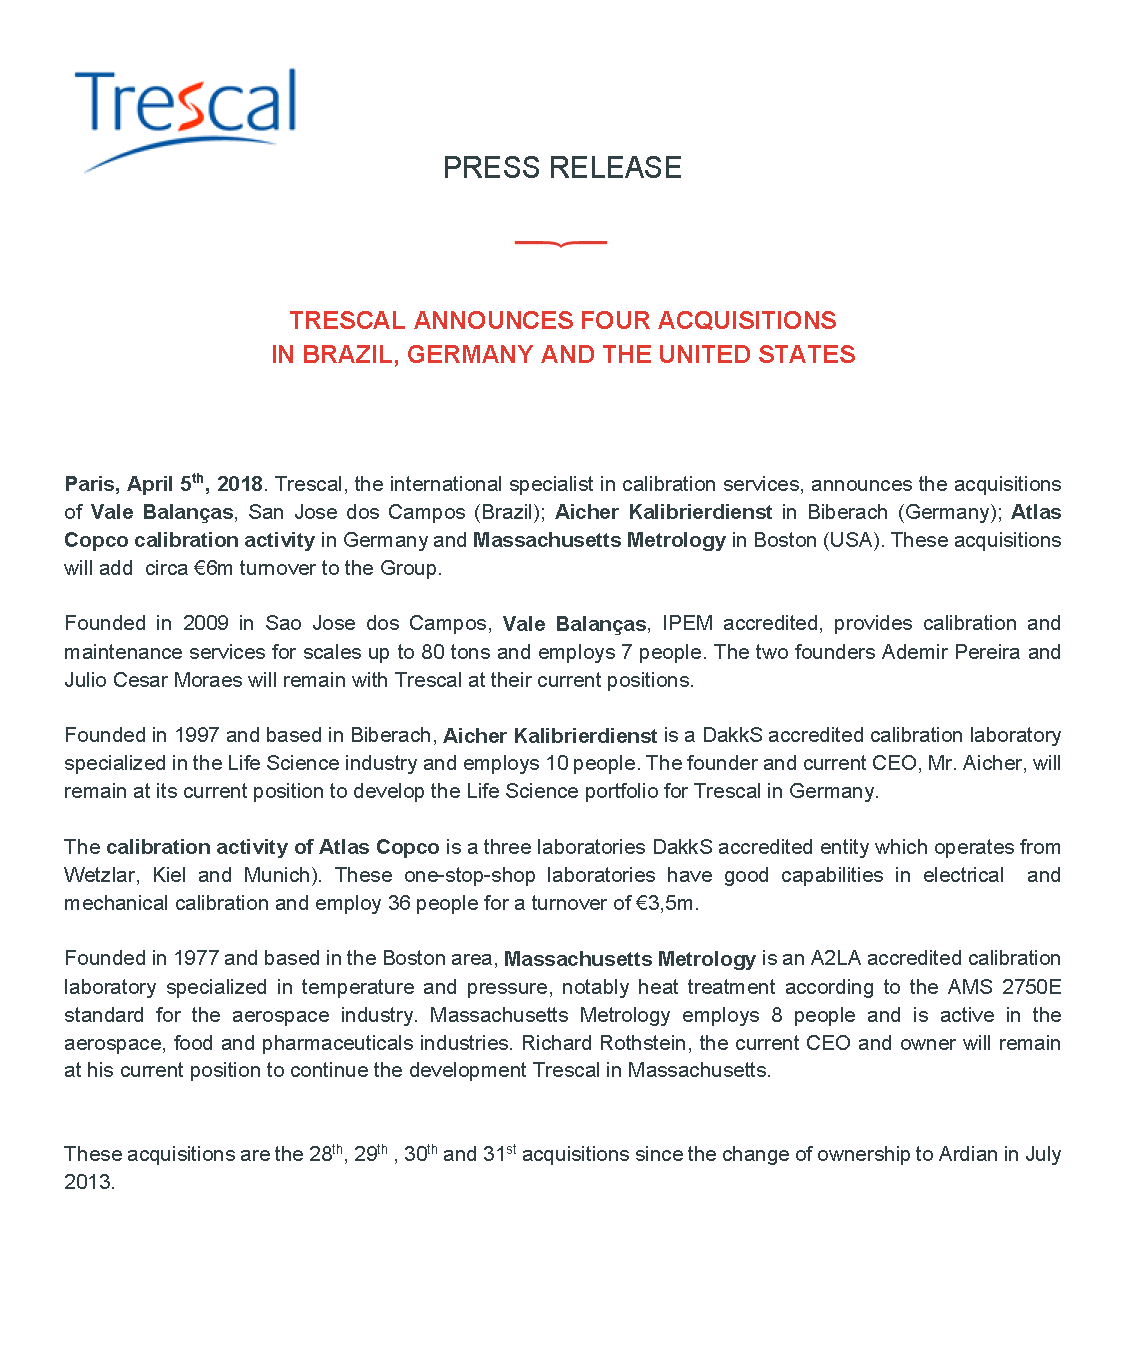 Trescal announces four acquisitions around the World